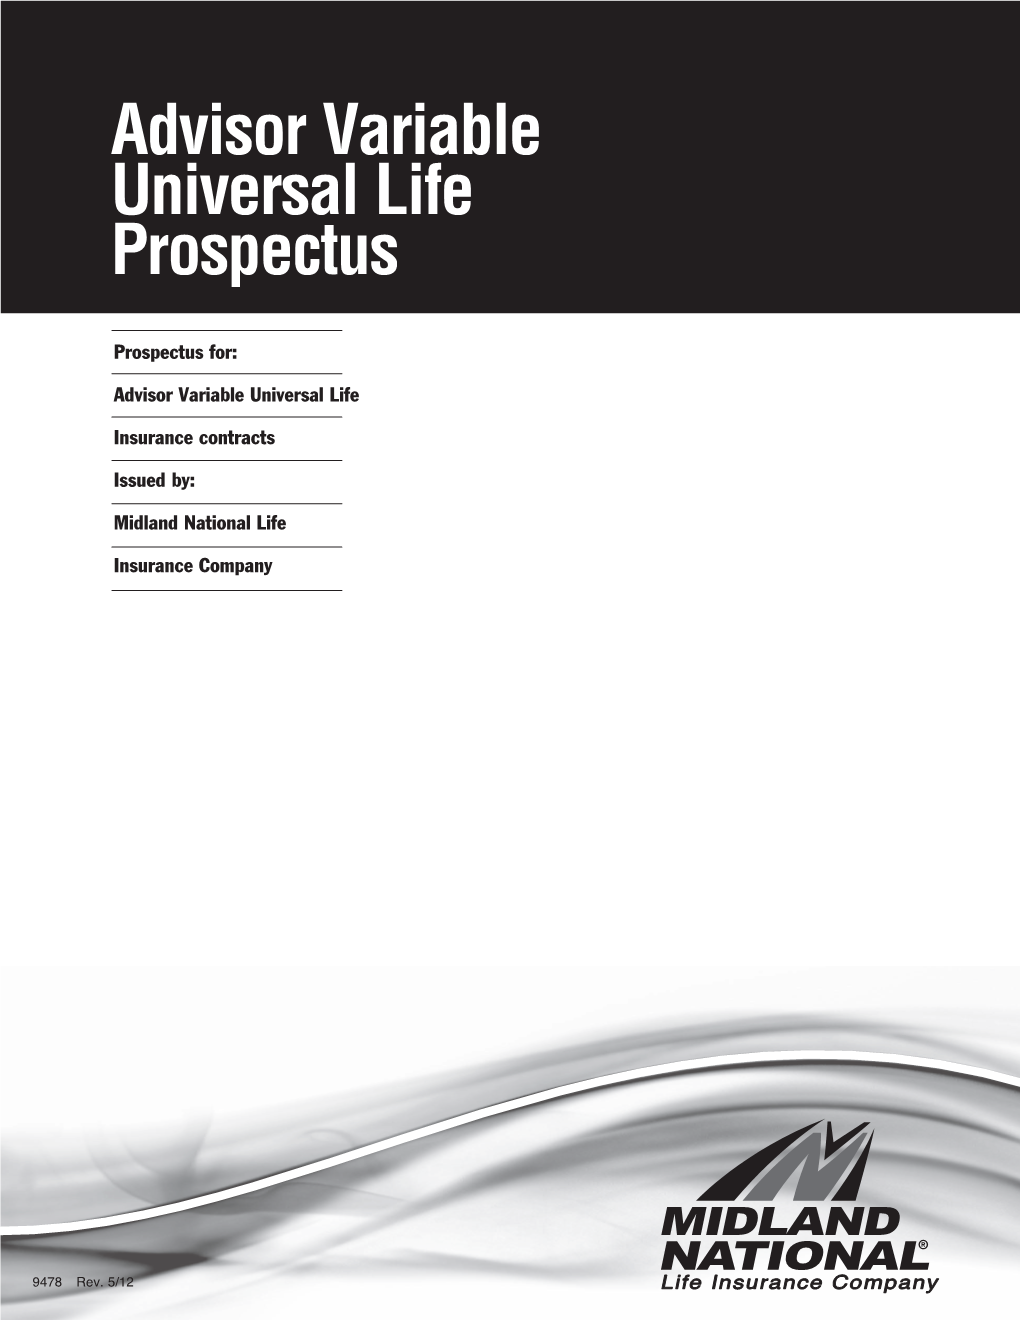 Advisor Variable Universal Life Prospectus